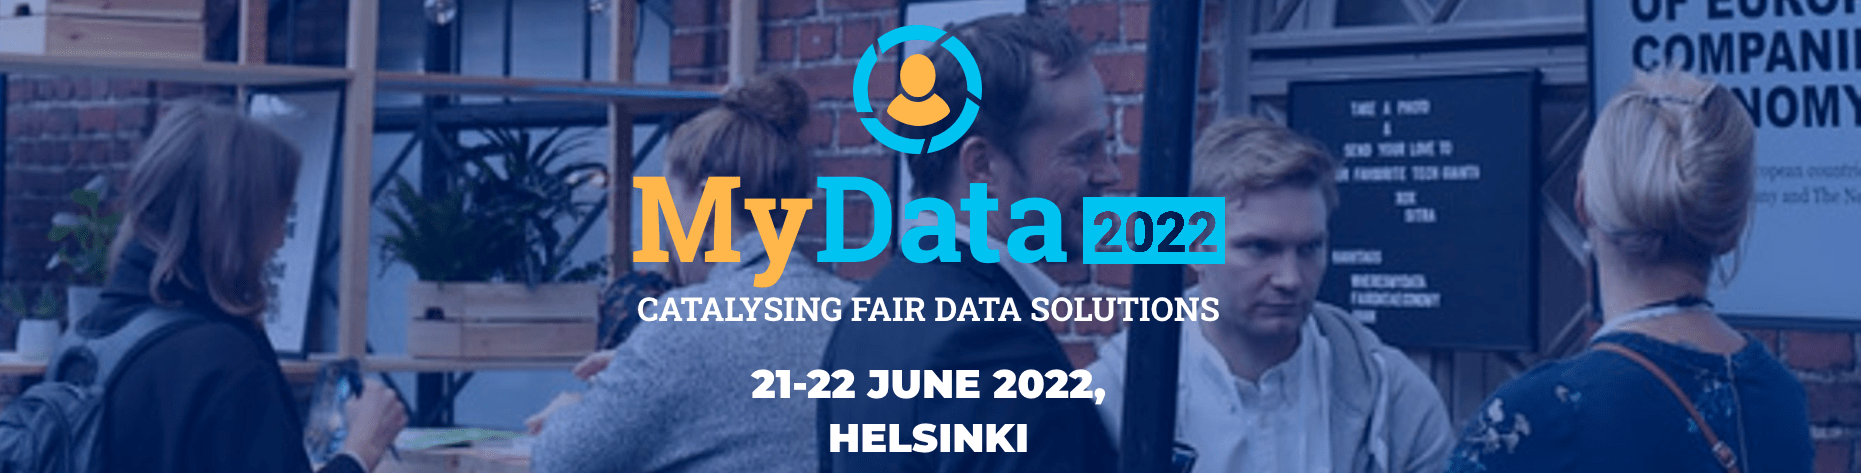 MyData 2022 @ Helsinki, Finland